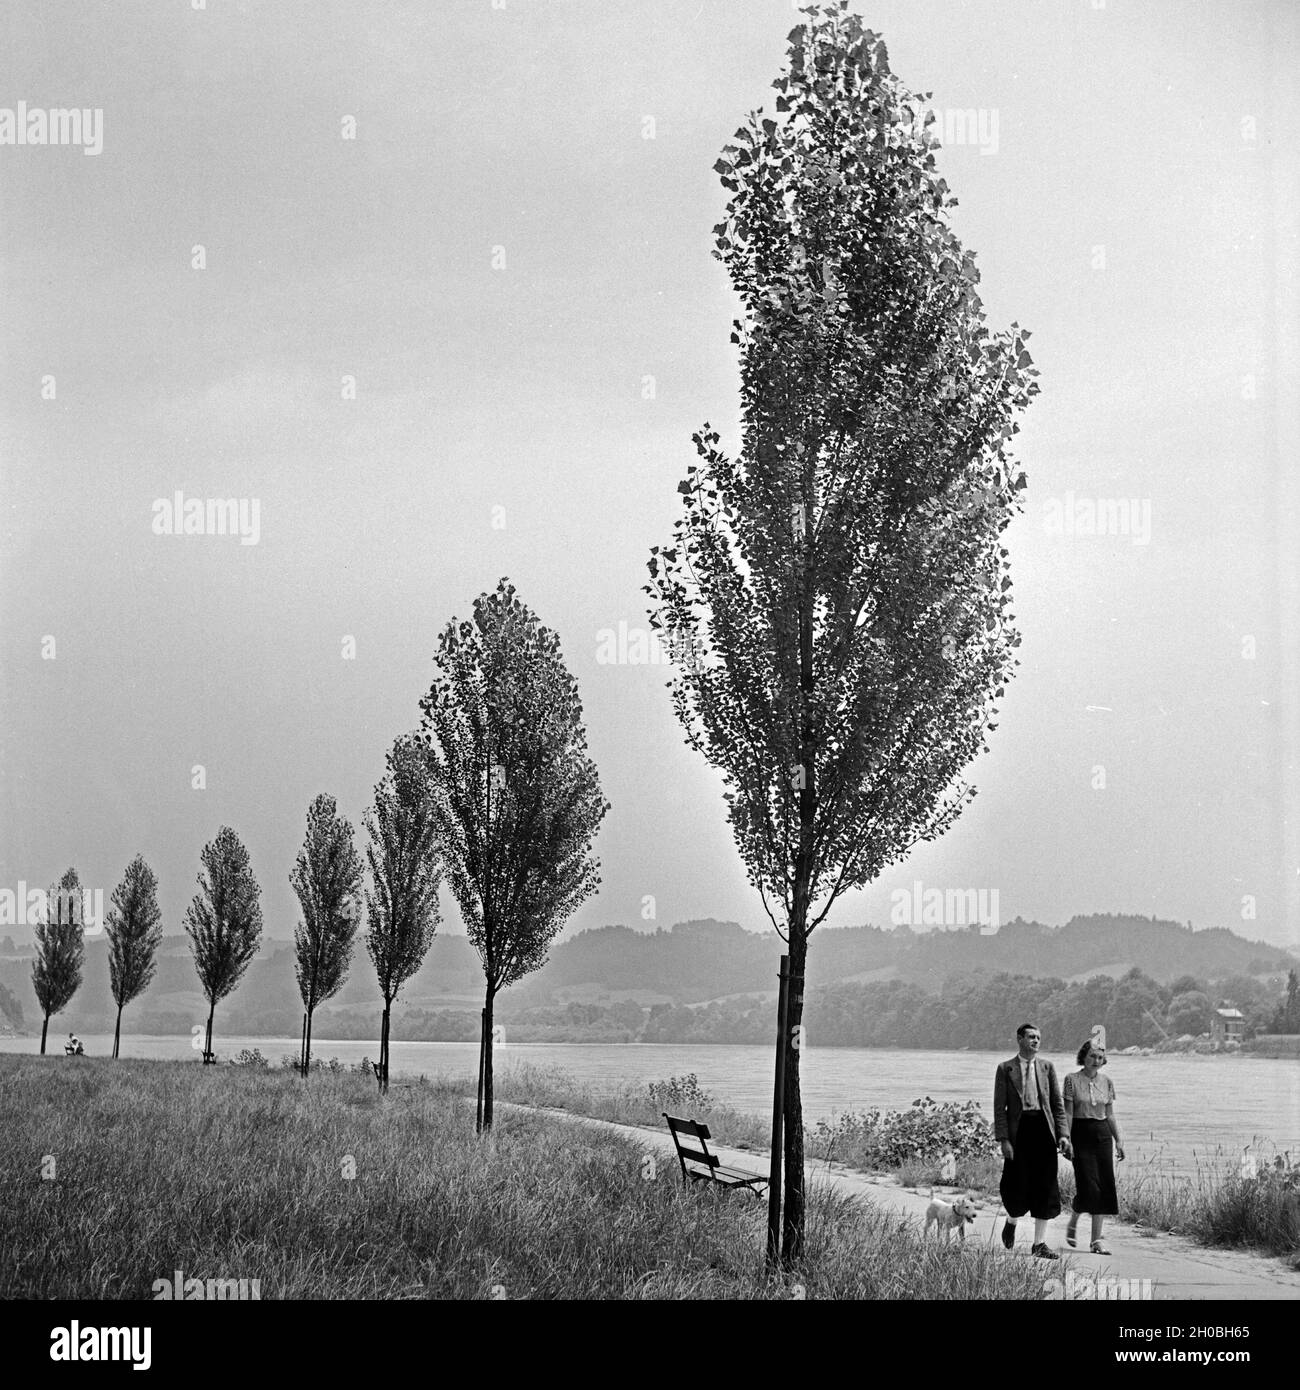 Ein junges Paar spaziert am Ufer der Donau bei Passau entlang, Deutschland 1930er Jahre. A young couple strolling on the sore of river Danube near Passau, Germany 1930s. Stock Photo